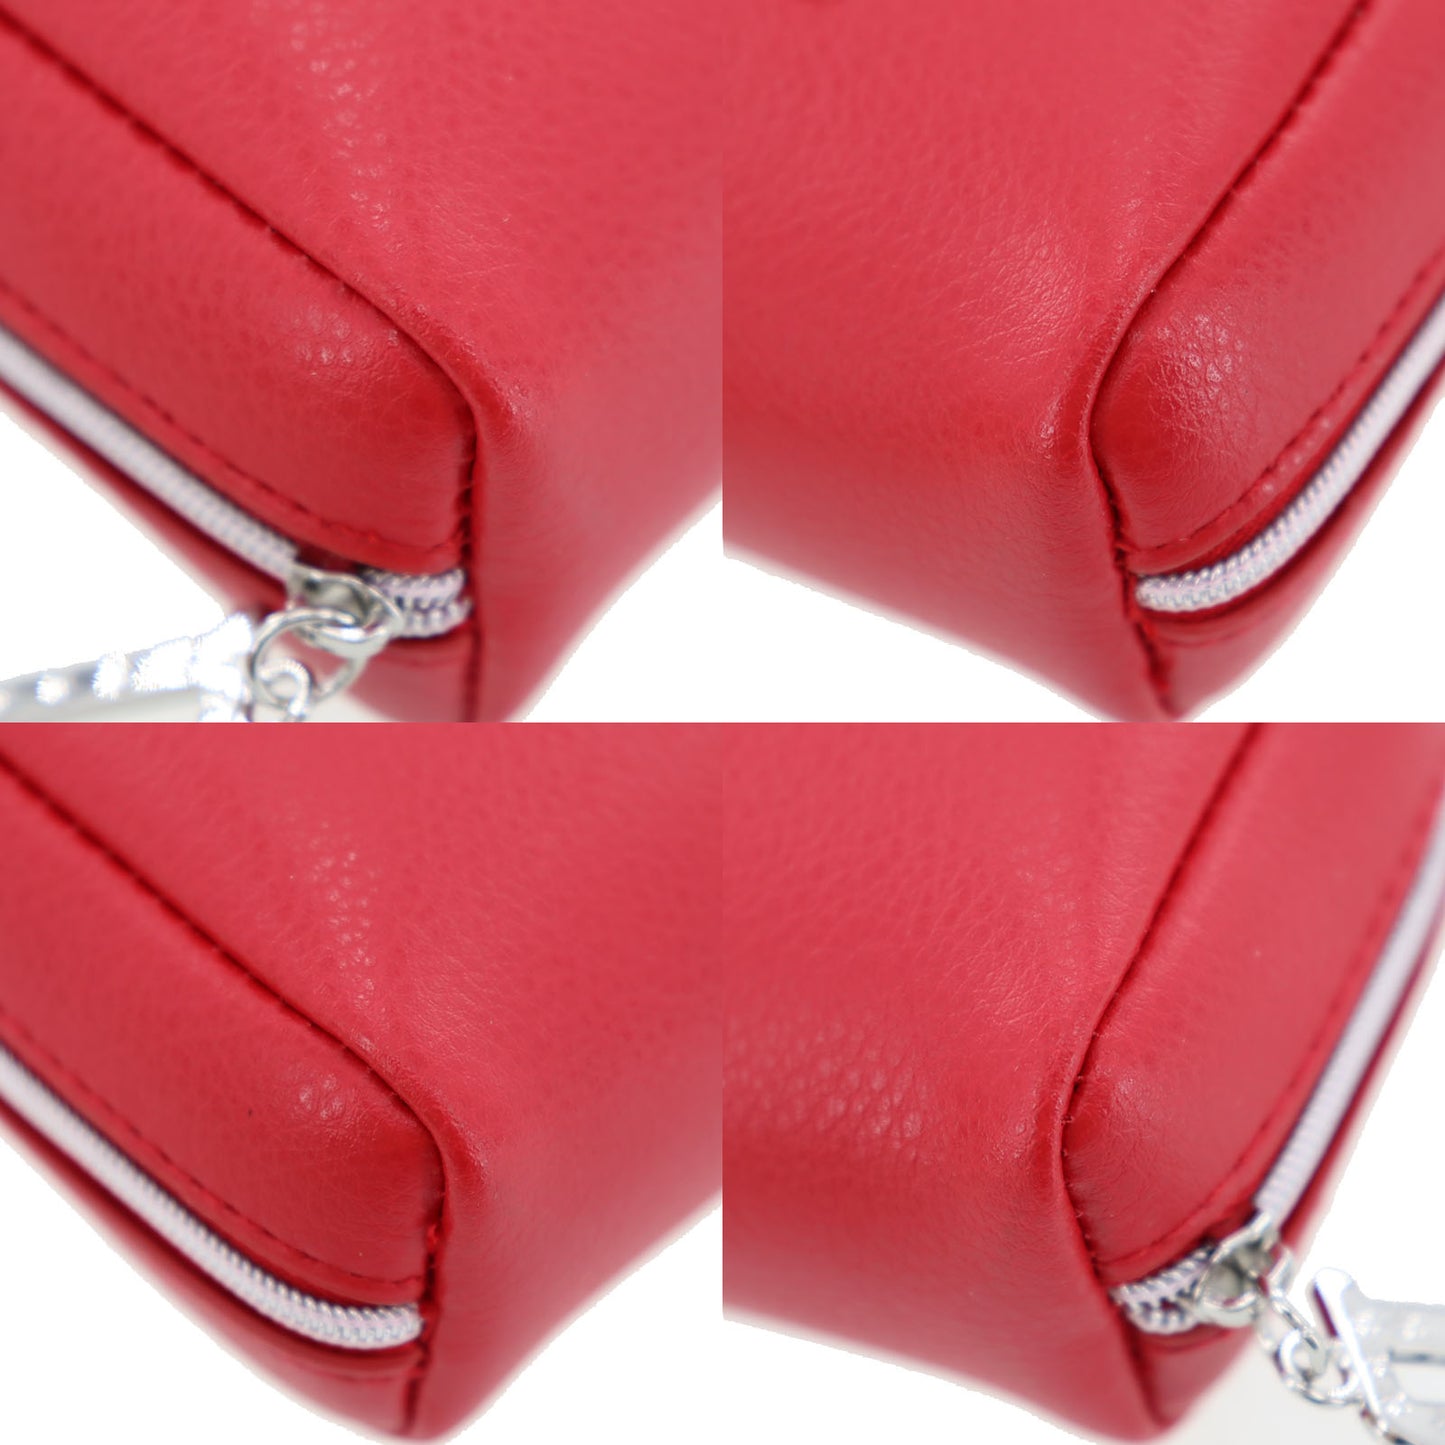 Christian Dior Logos Pouch Red 100% Polyurethane Novelty #AG489